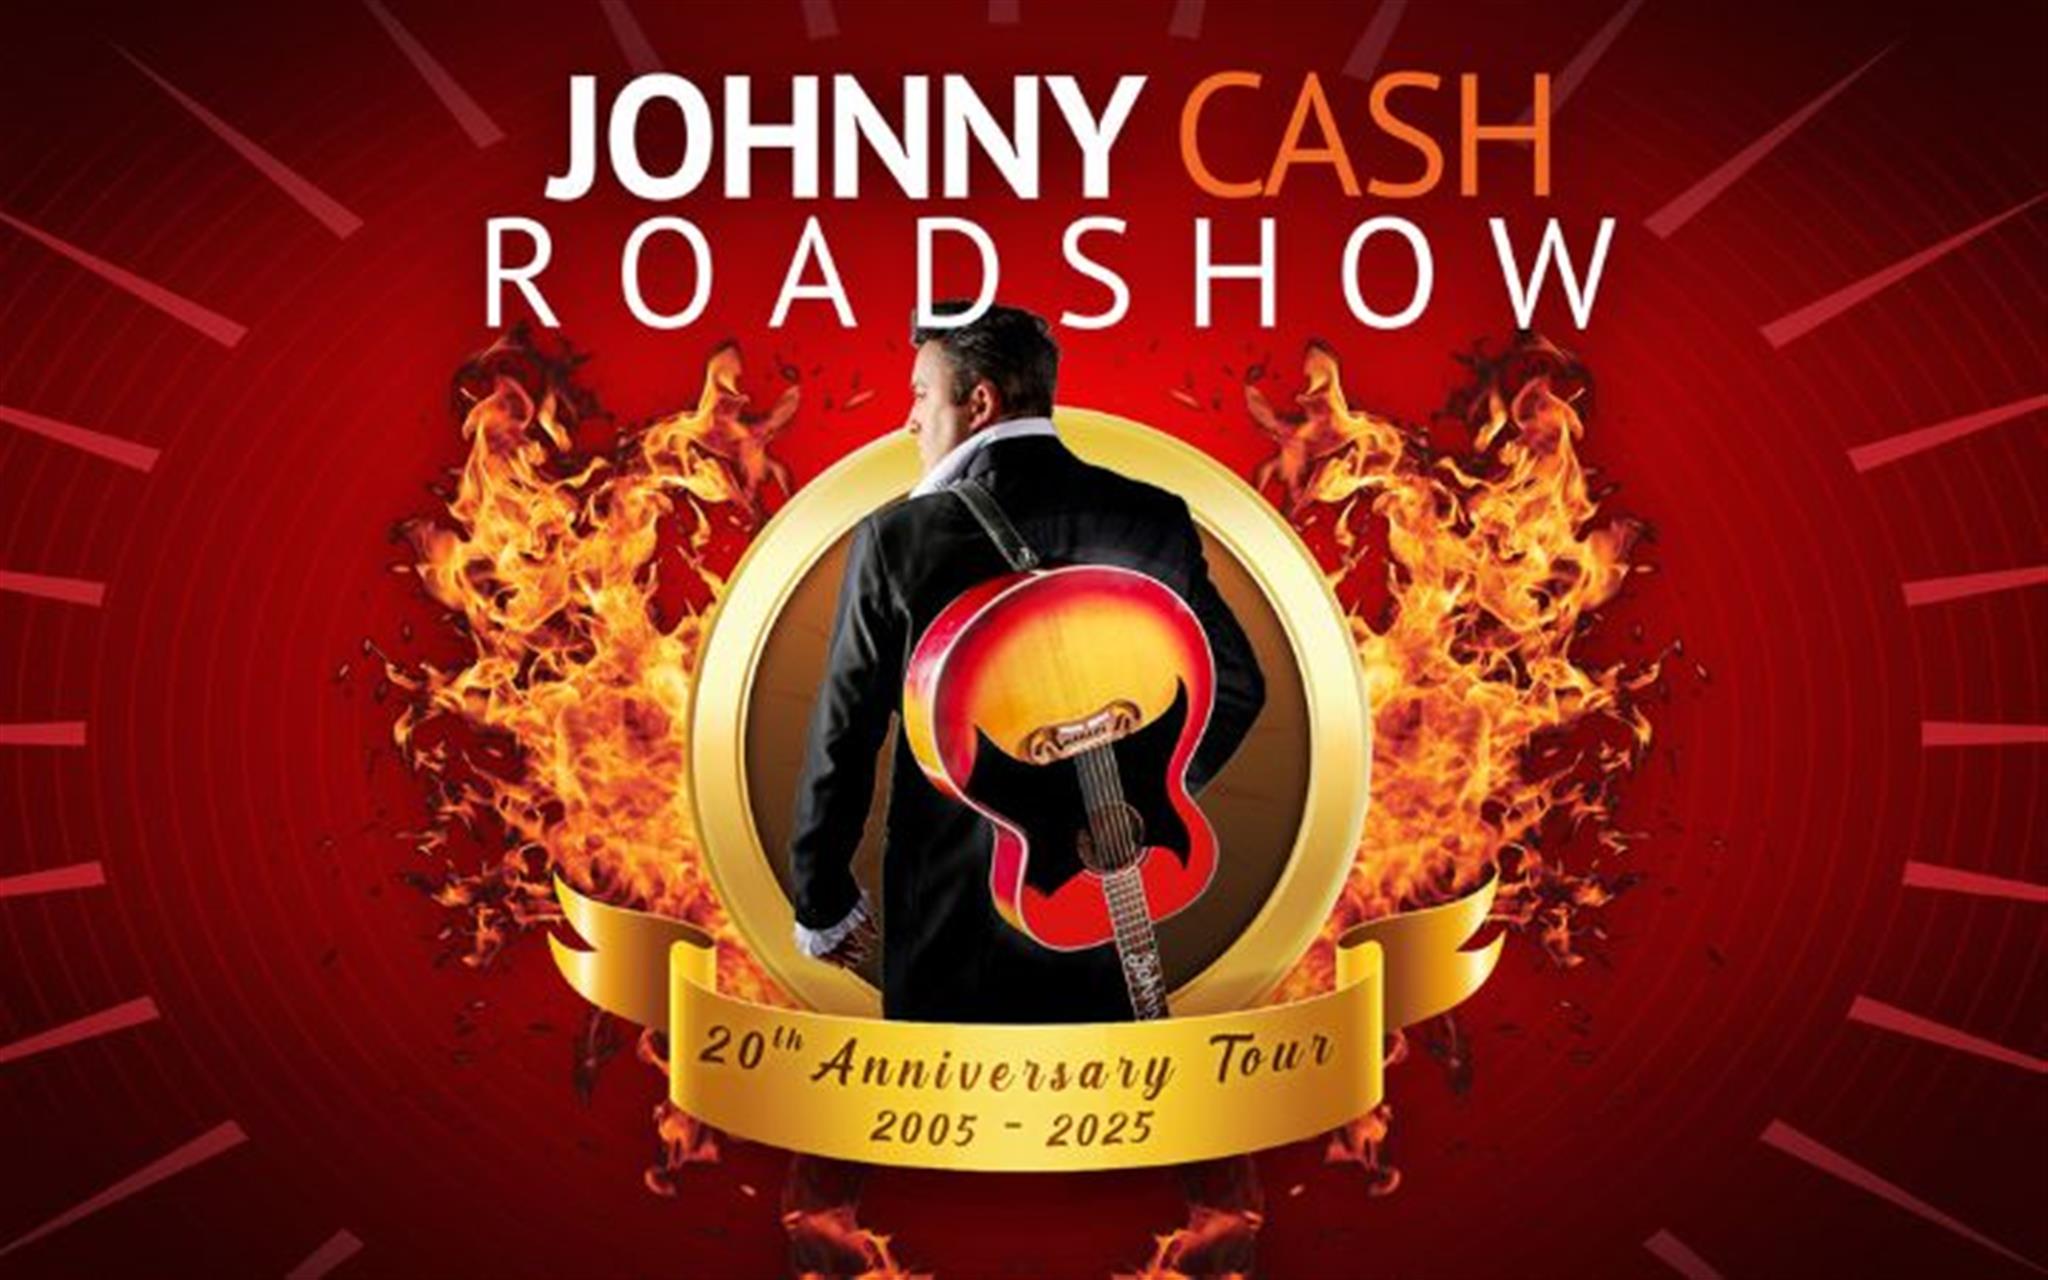 Johnny Cash Roadshow image